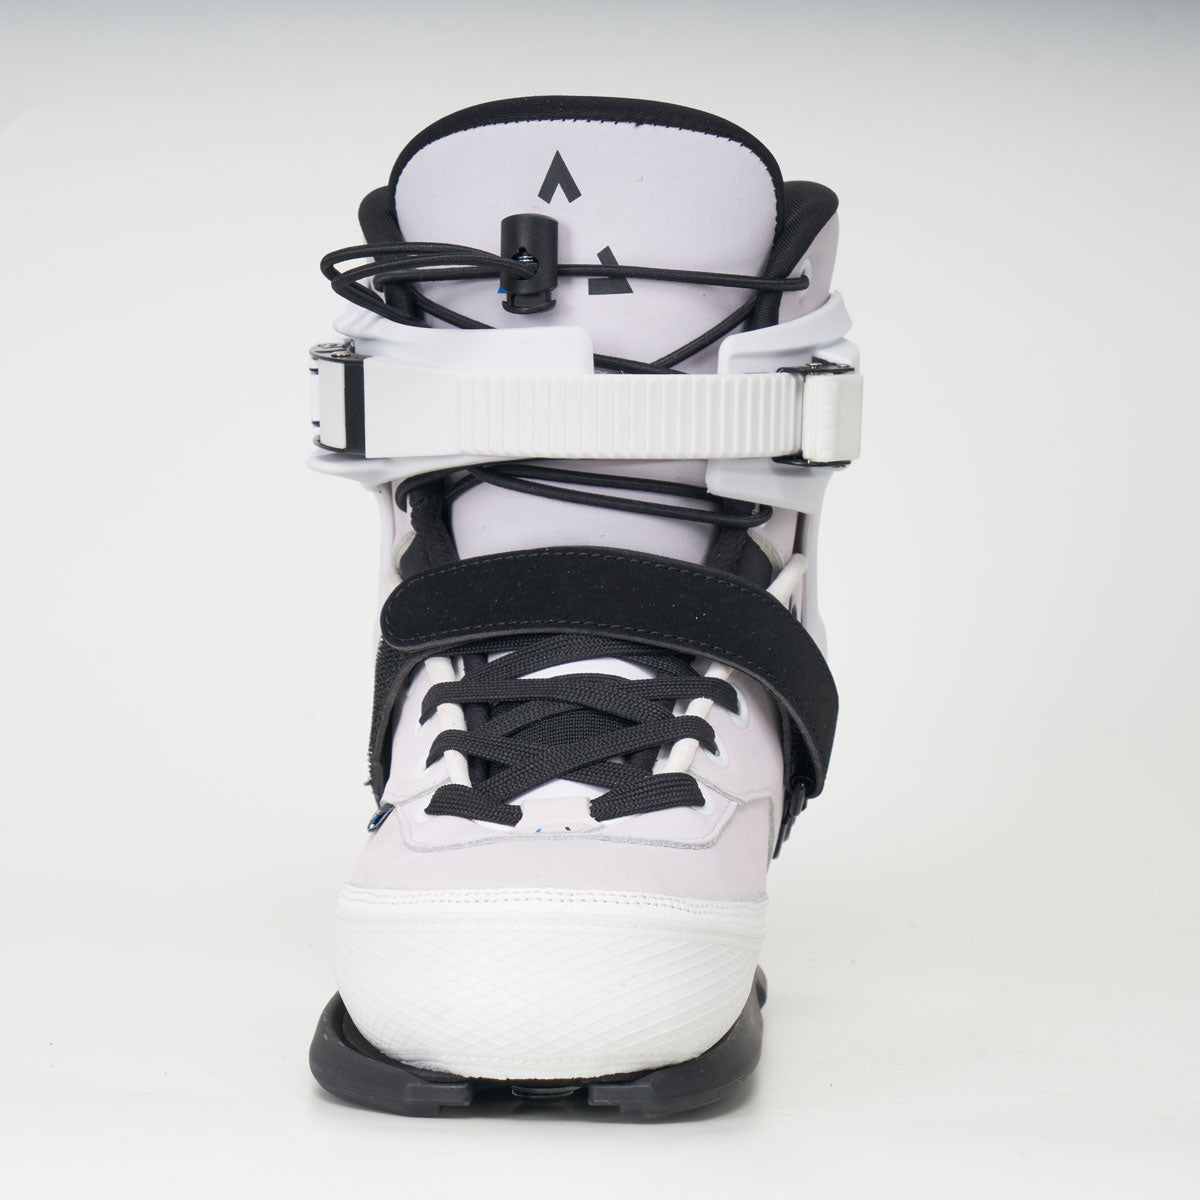 Faction Tactical V1 Midnight Skates - White – Boot only